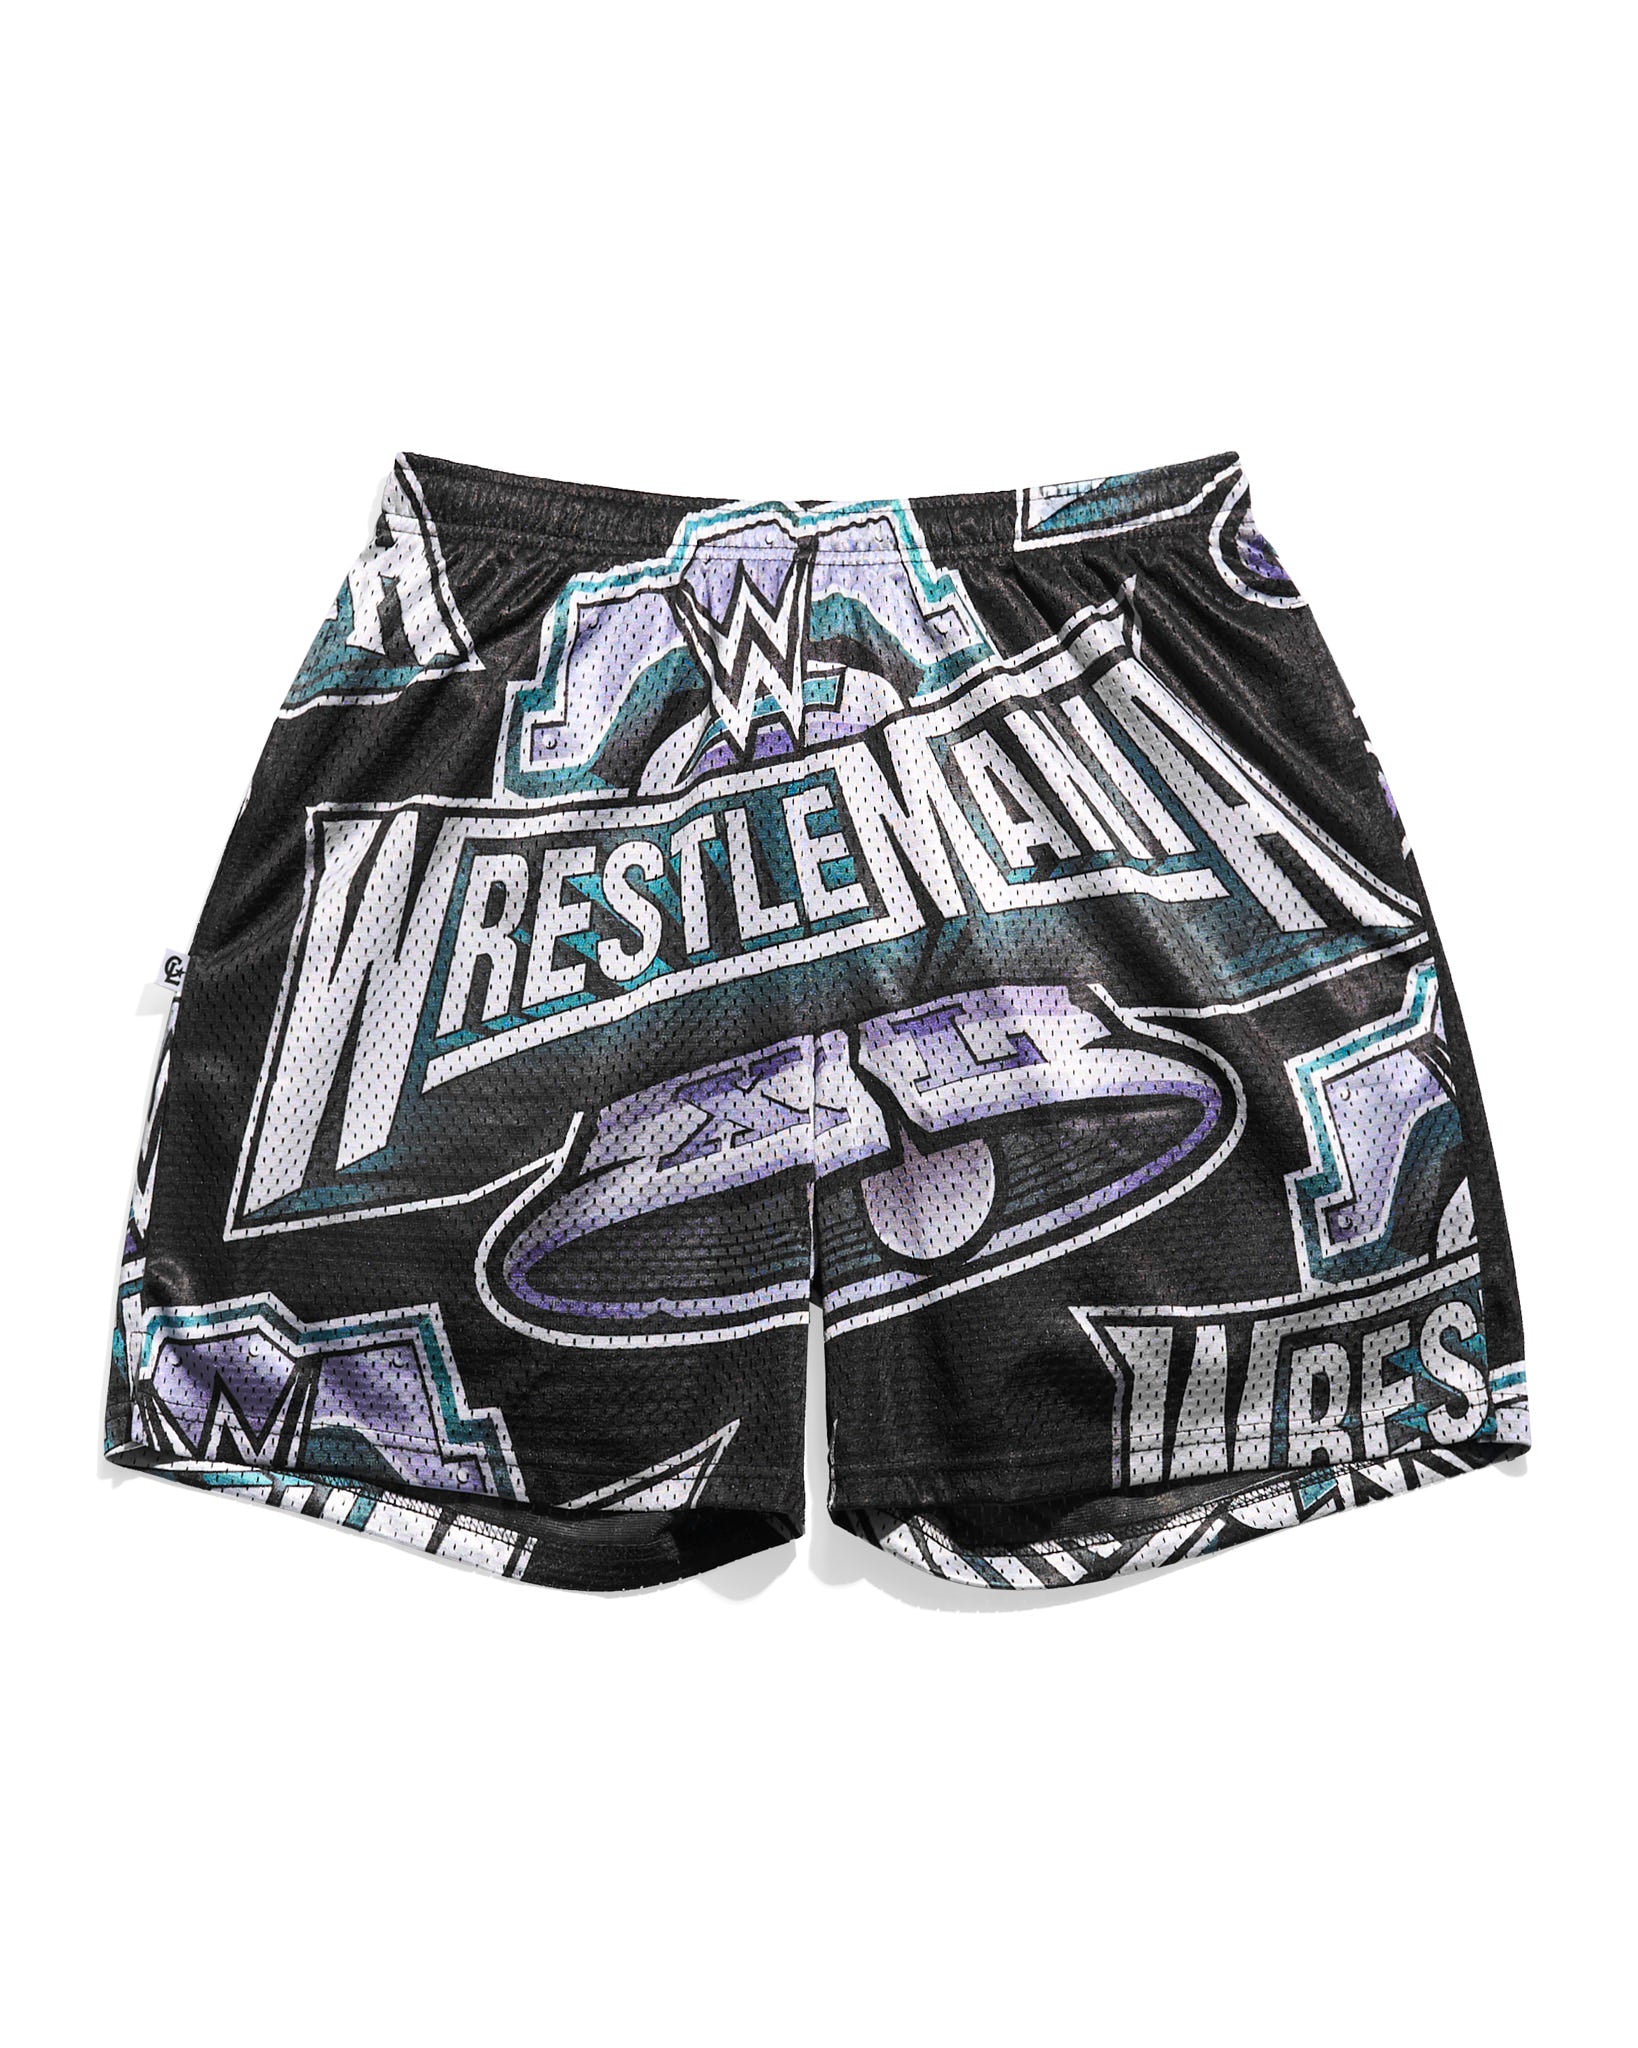 WrestleMania 40 Big Logo Retro Shorts